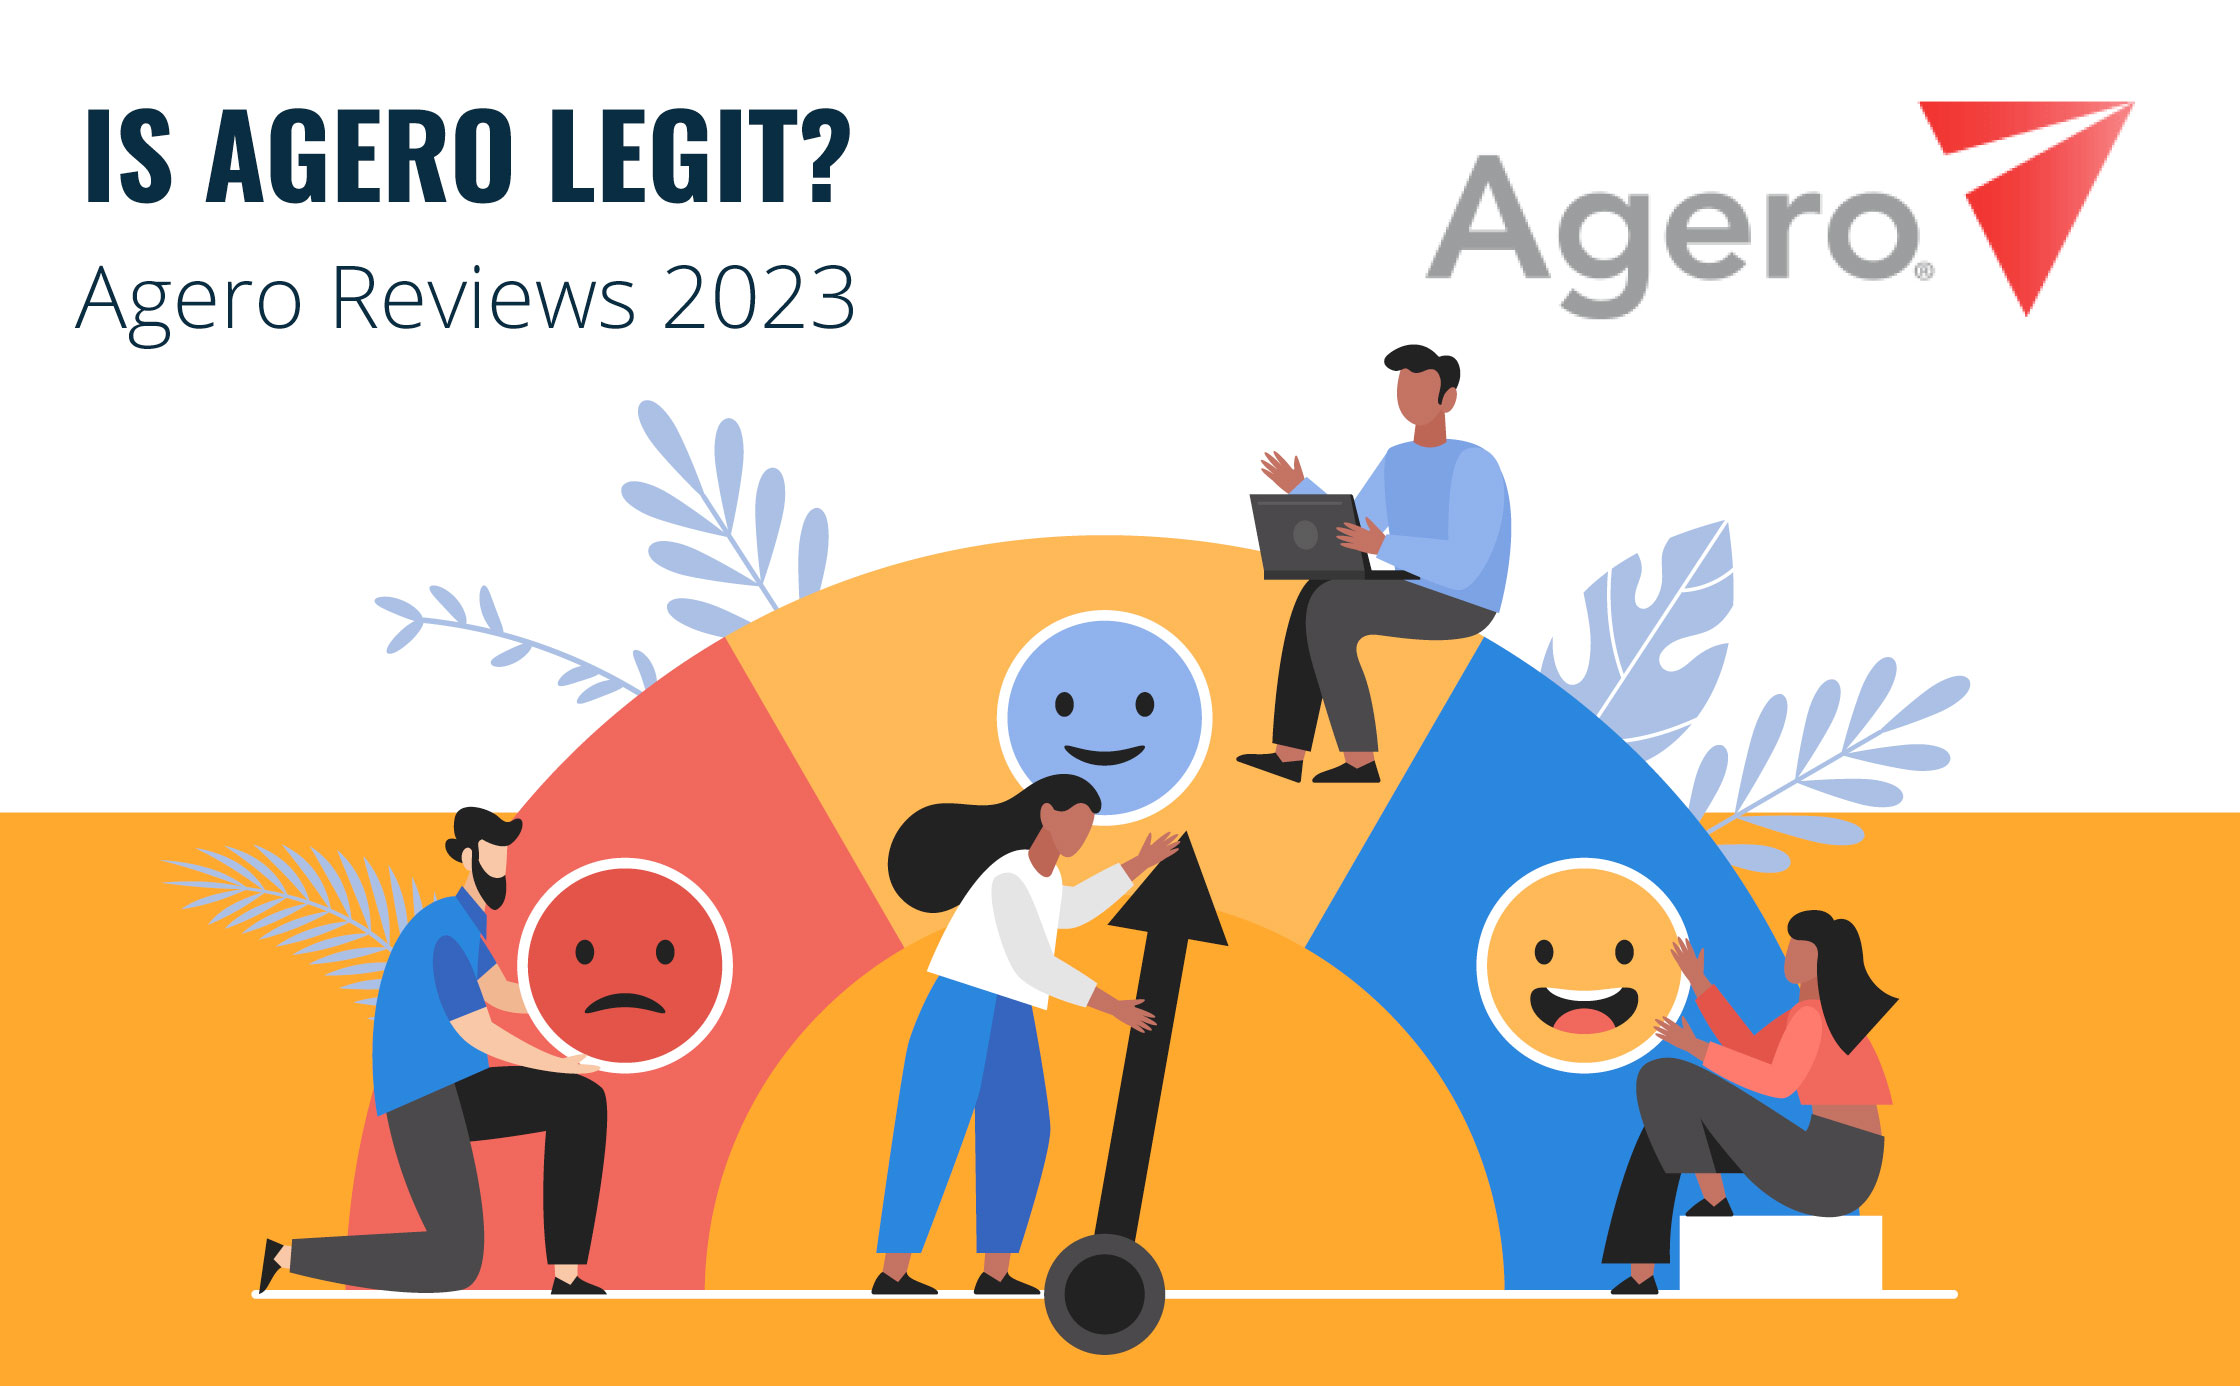 Agero Reviews 2023: Is Agero Legit?